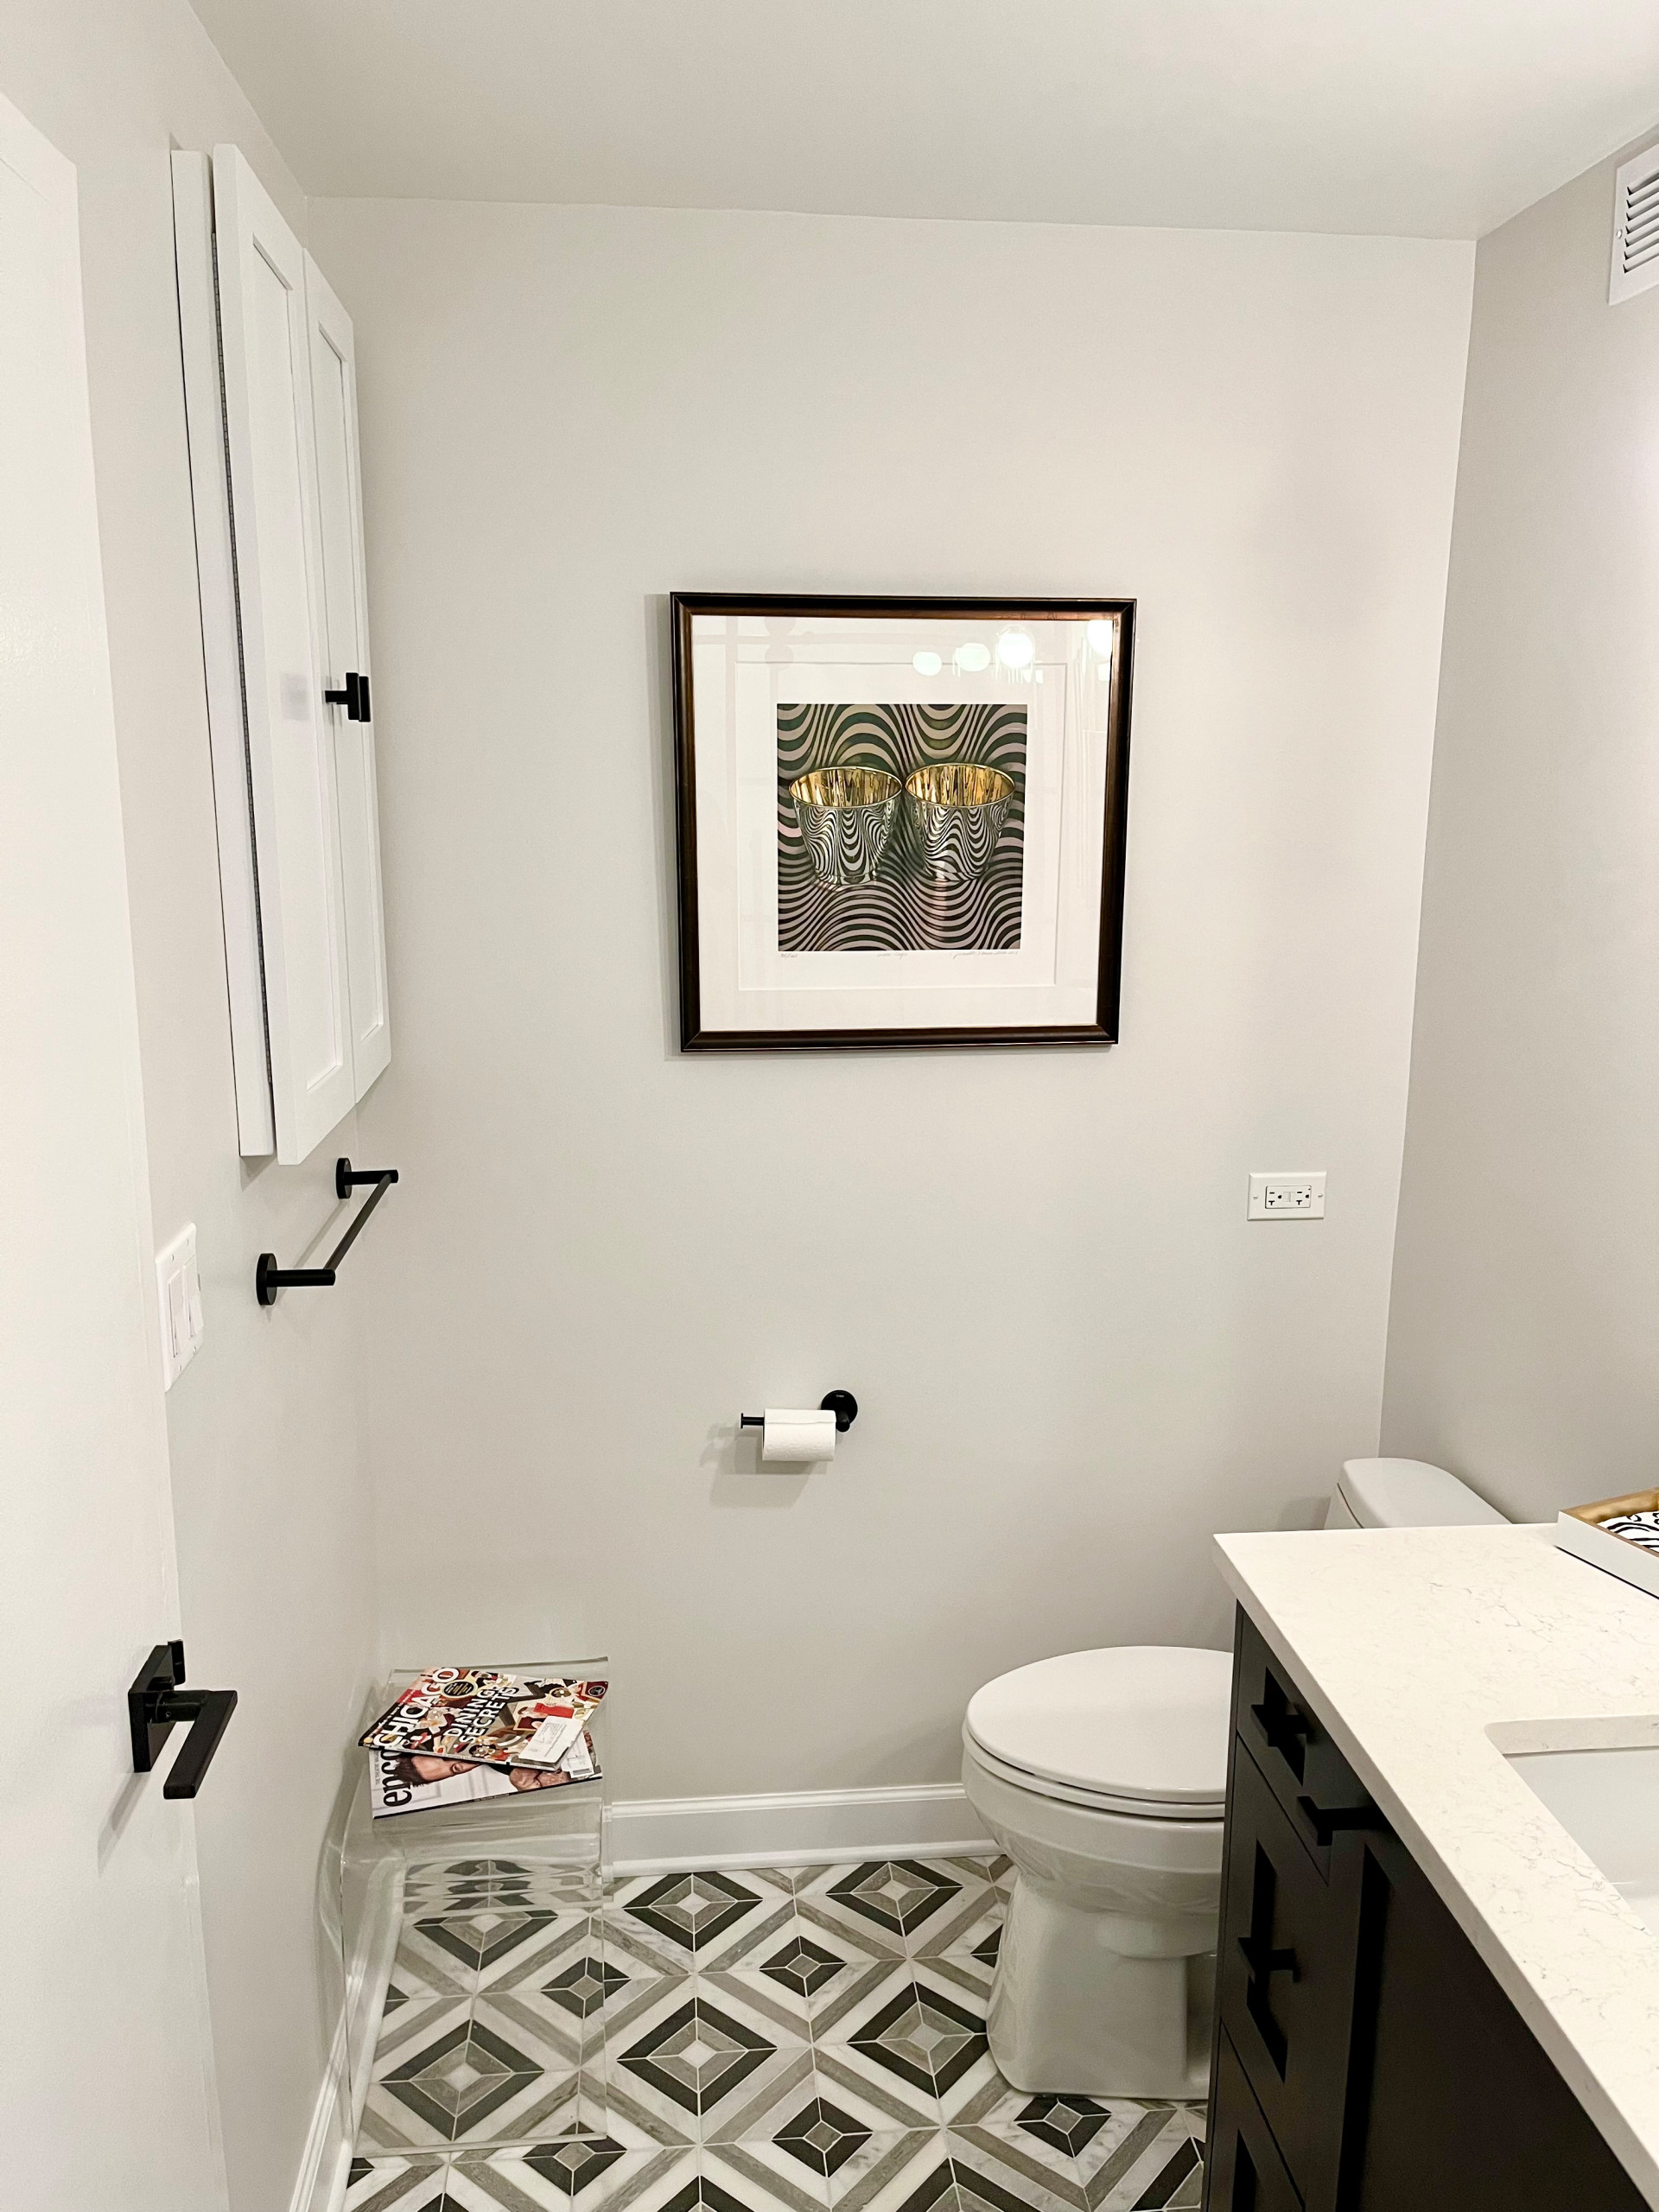 Schiller Master and Hall Bathroom Remodel